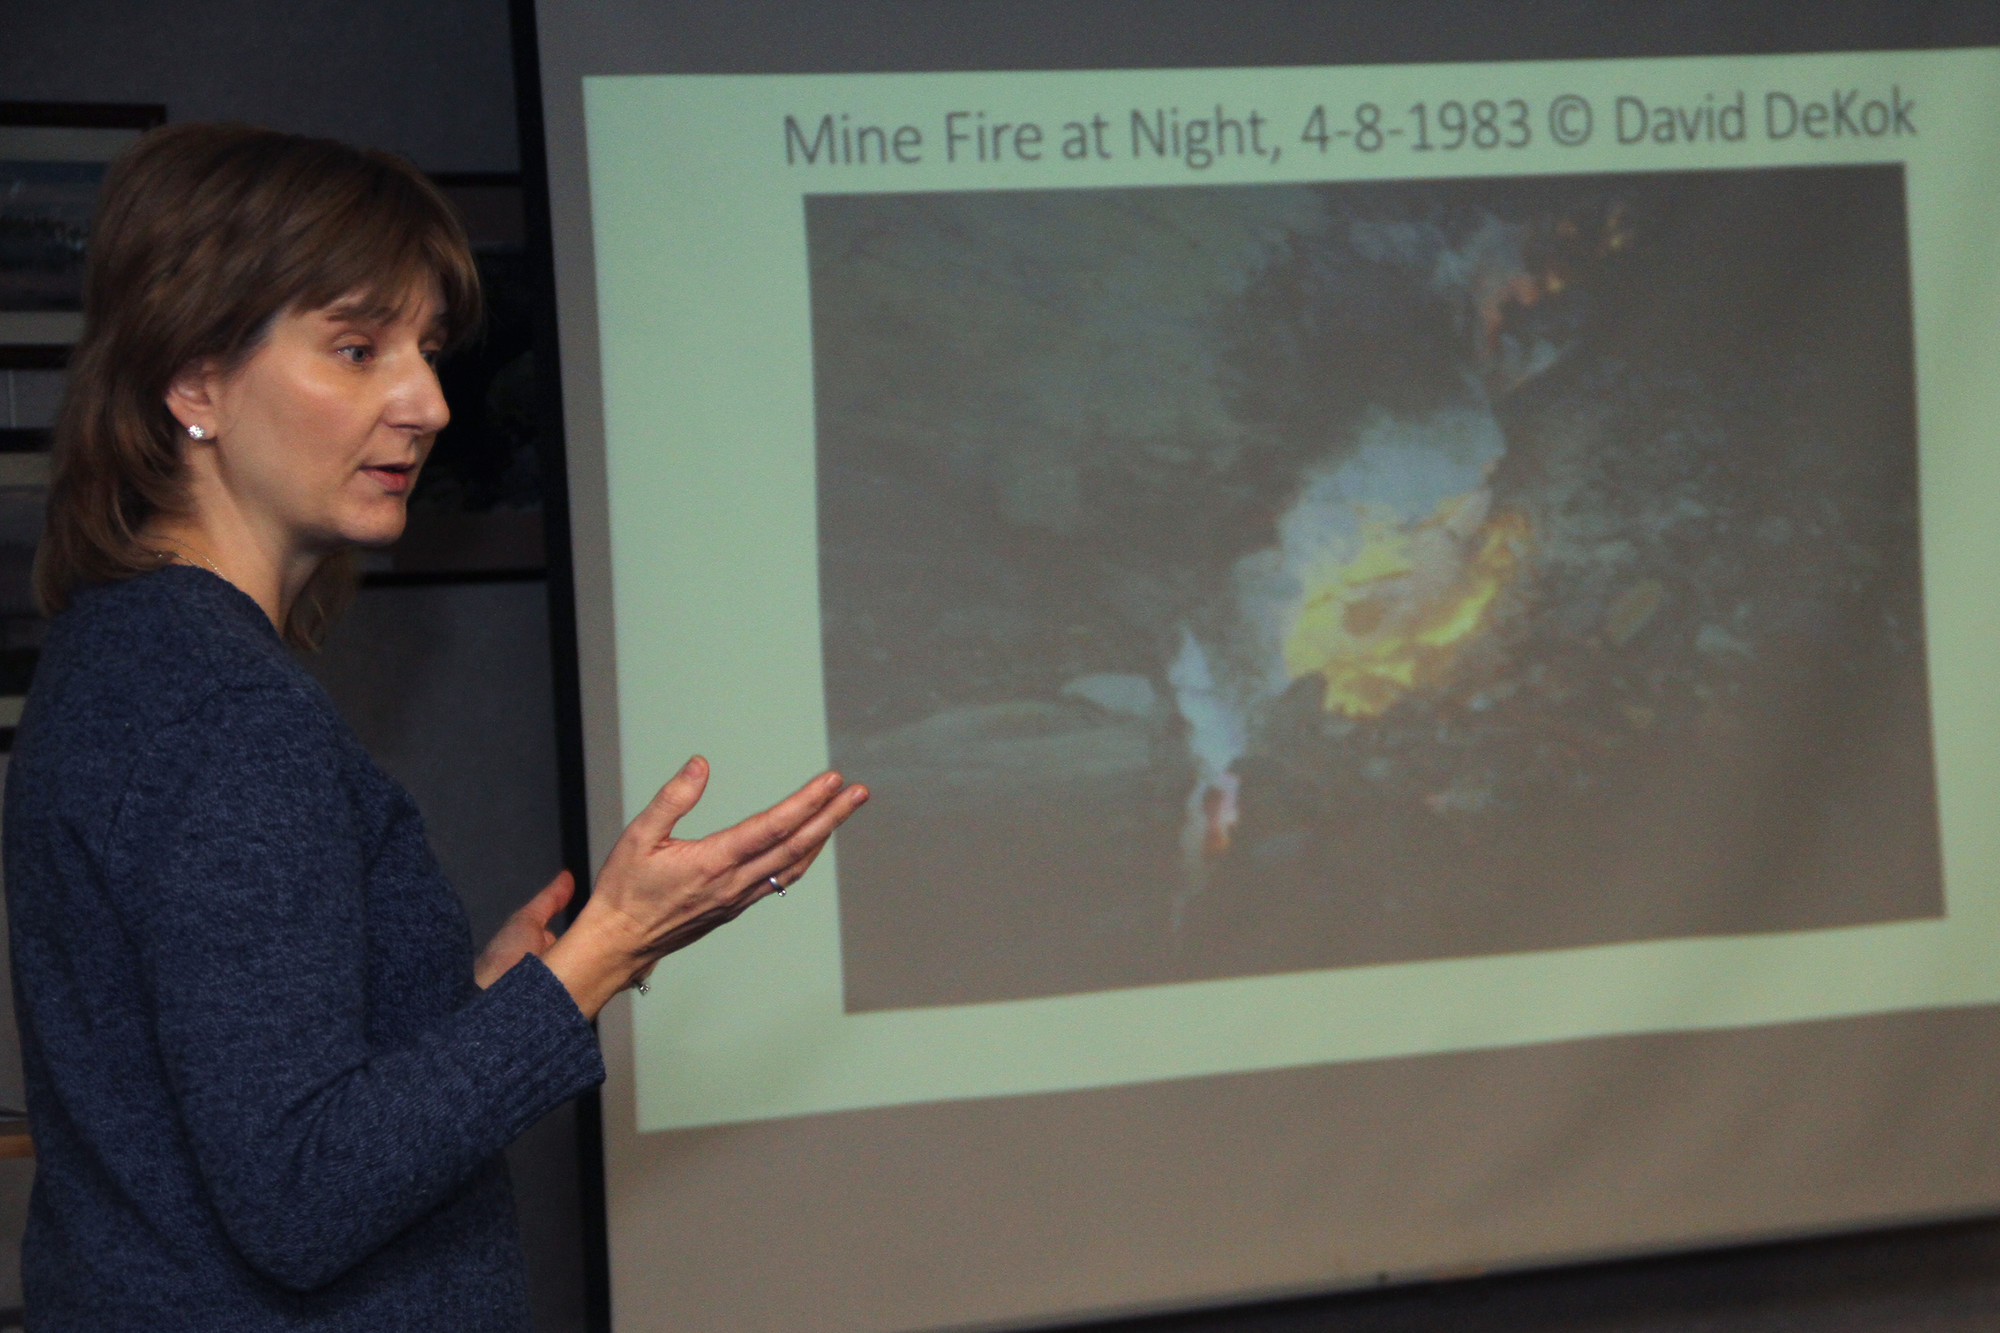 Natalie Harnett showed photos of the coal mine fires in Pennsylvania.